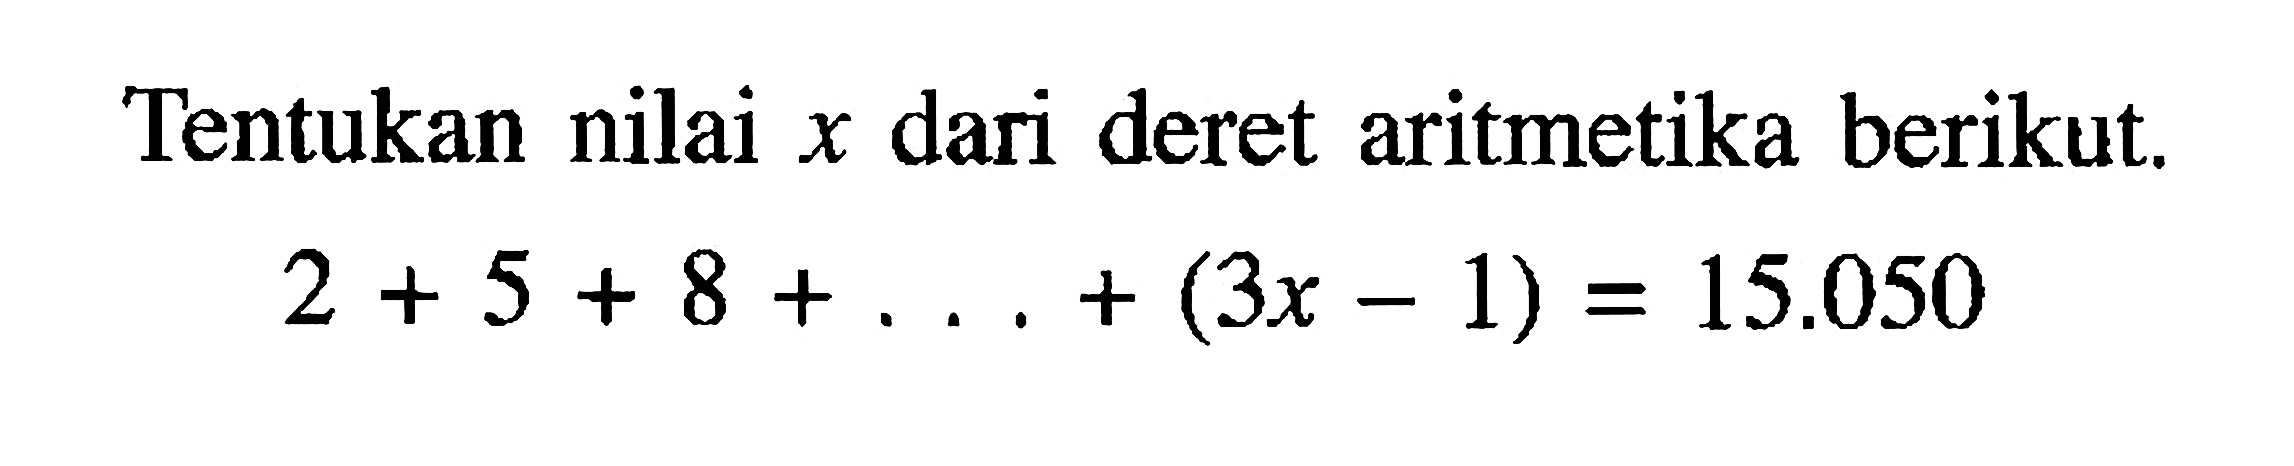 Tentukan nilai x dari deret aritmetika berikut.2+5+8+....+(3x-1)=15.050